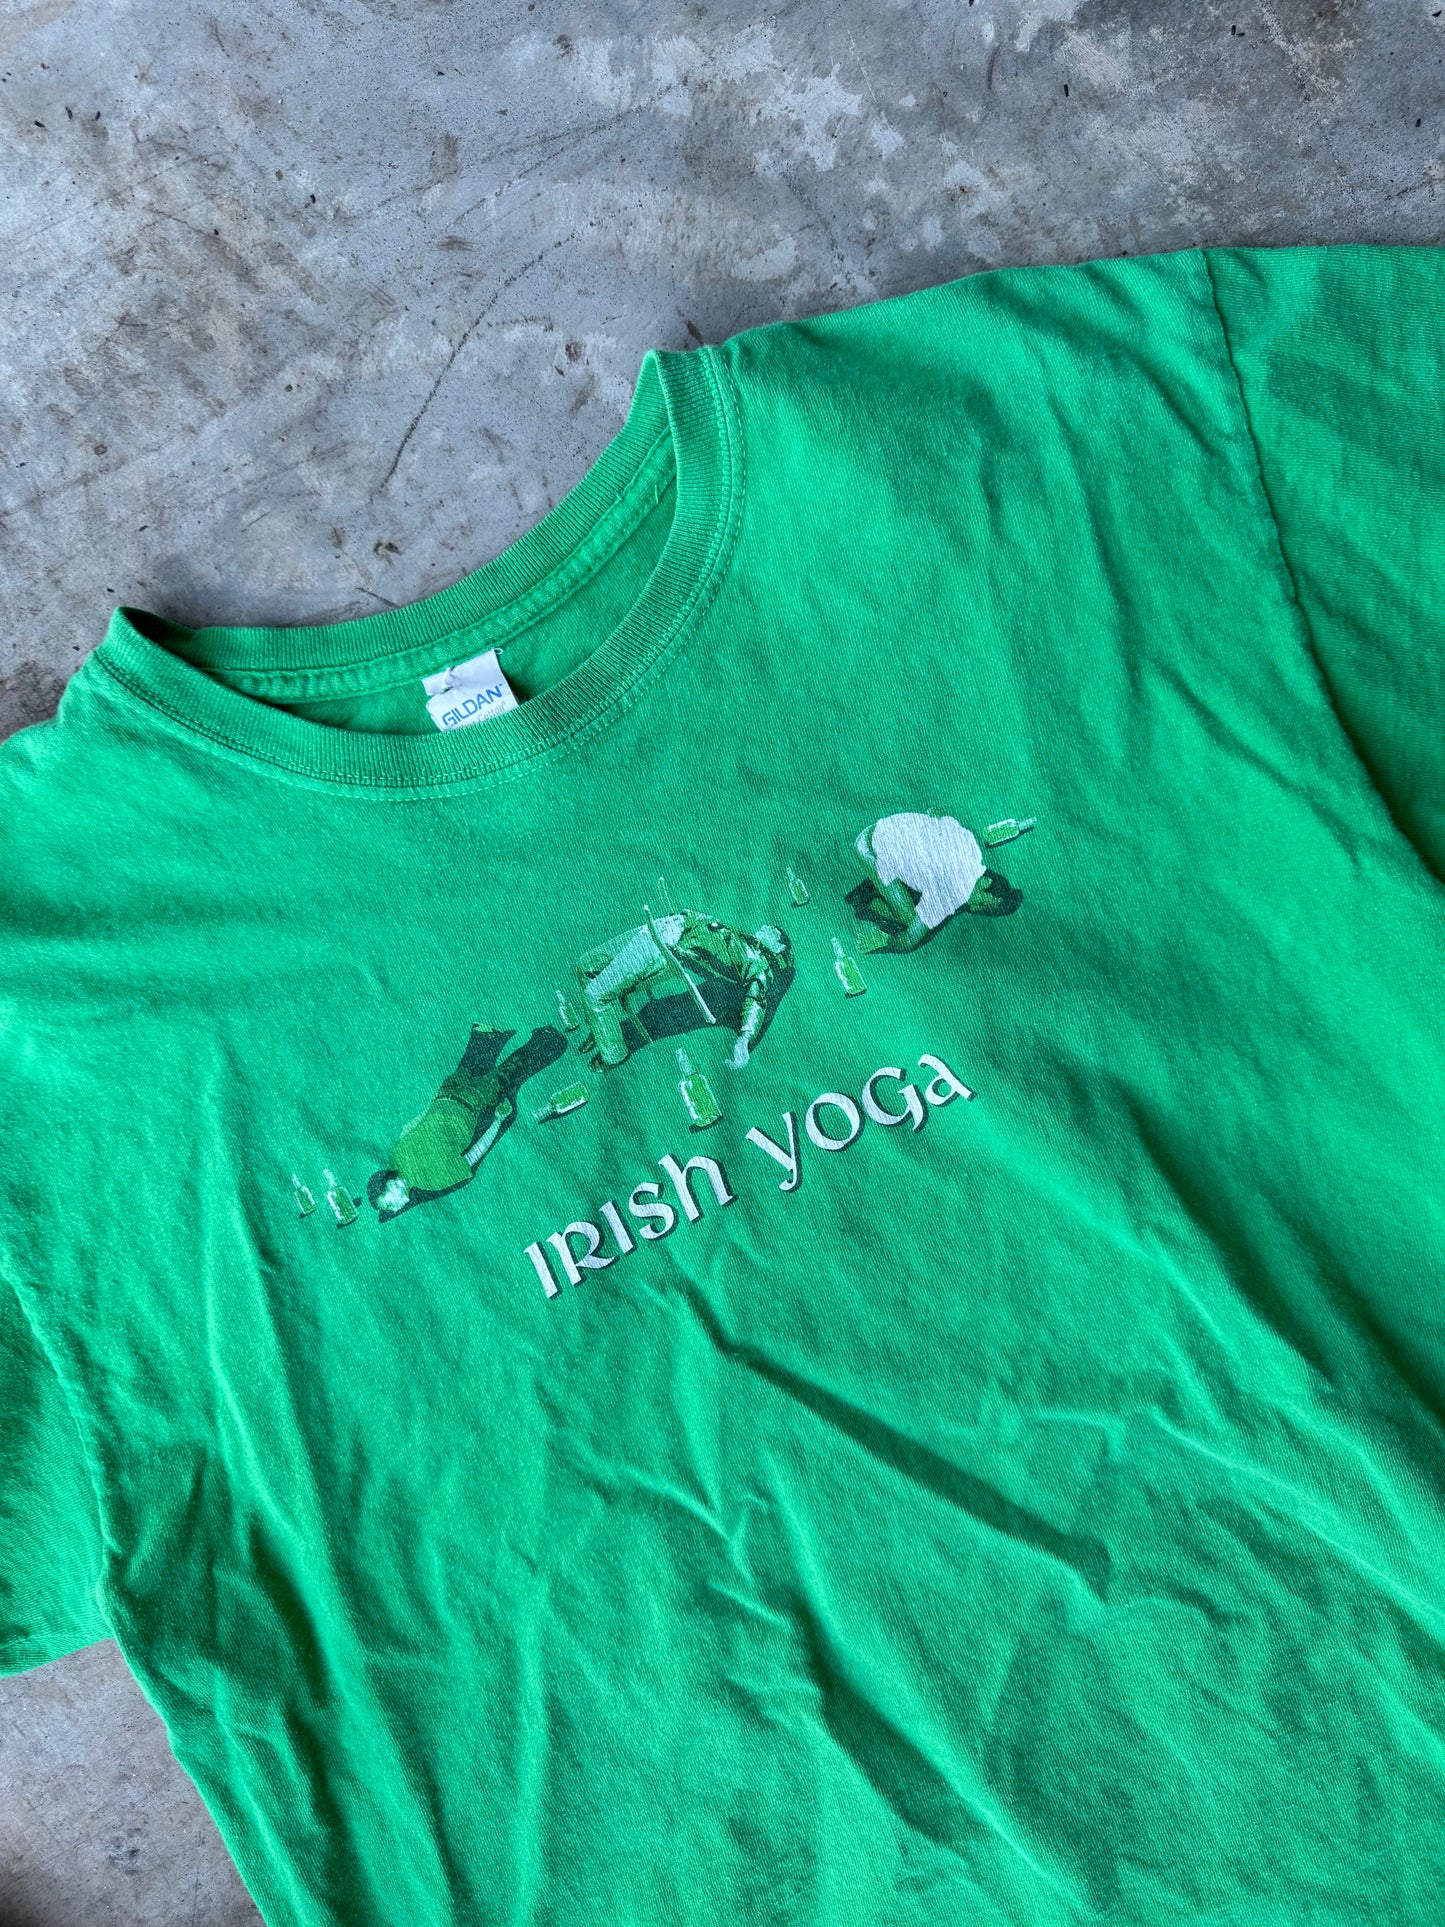 Irish Yoga Tee